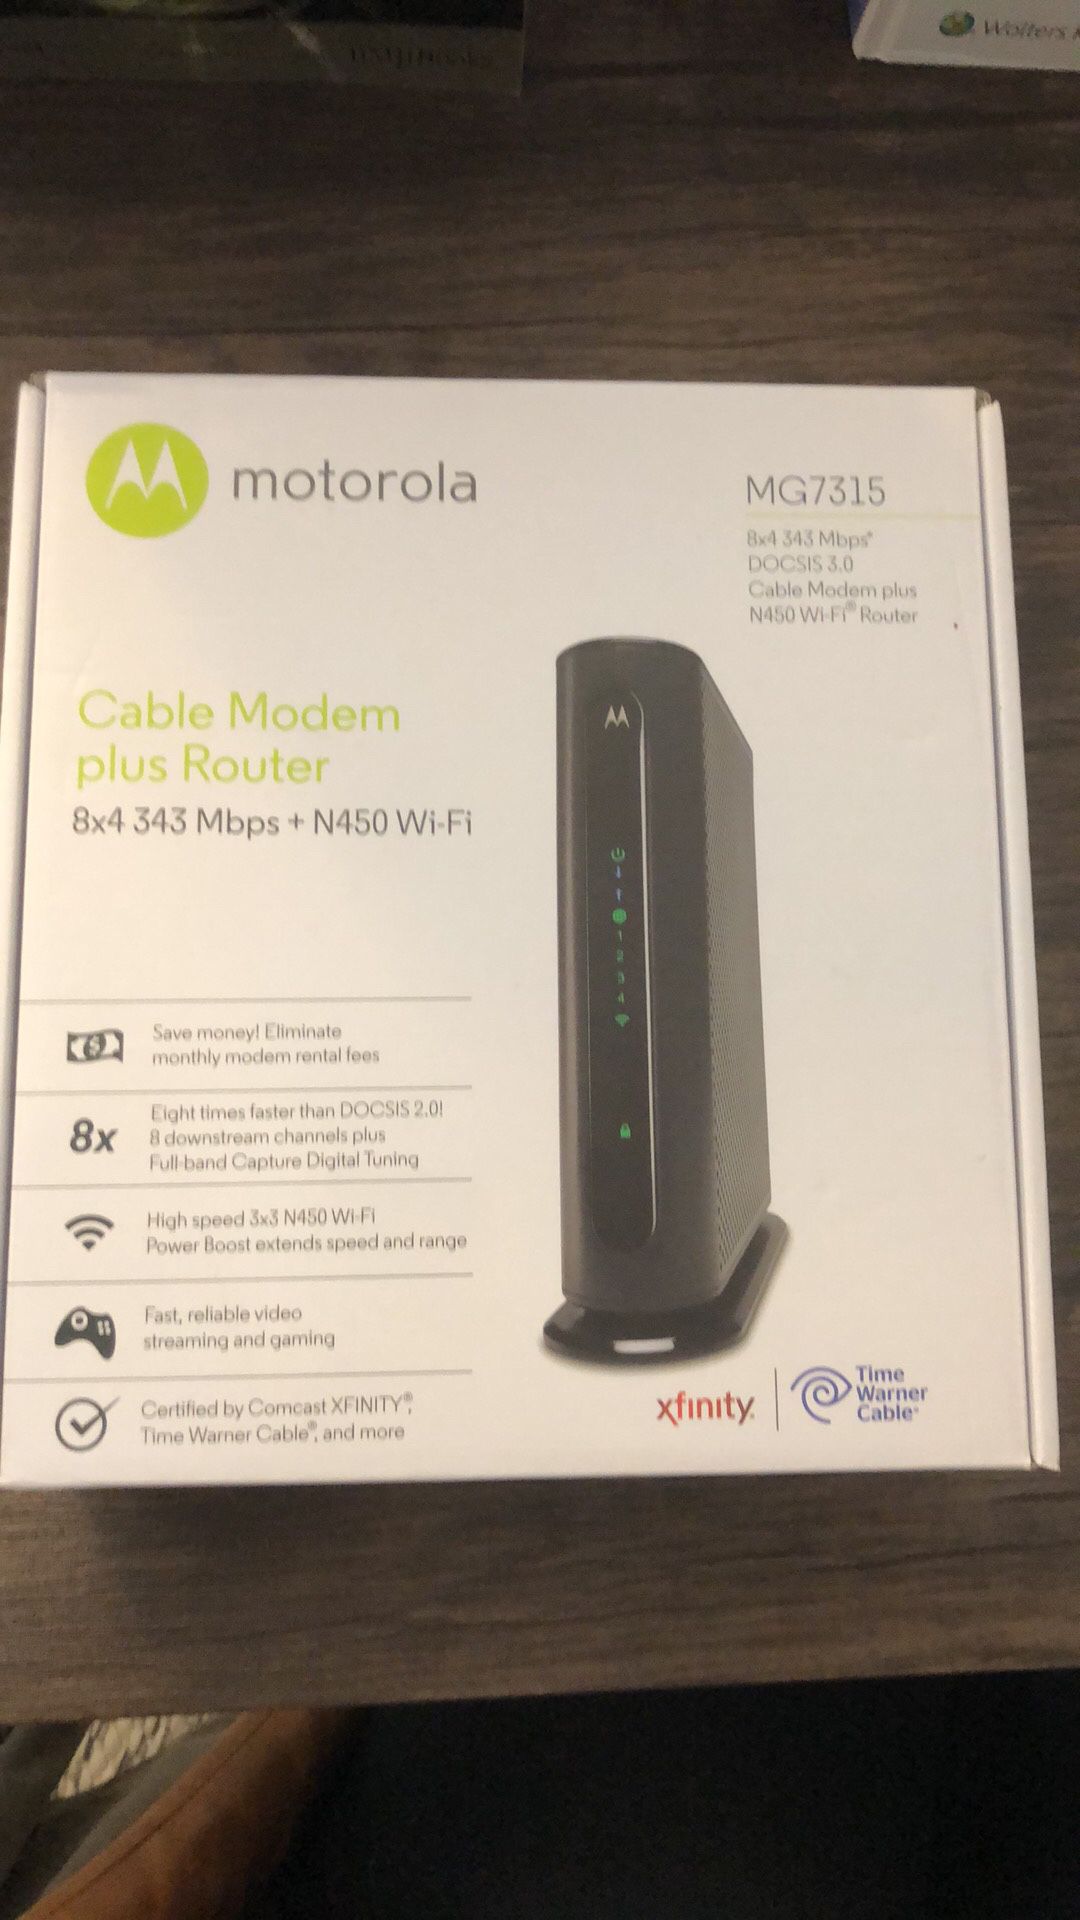 Motorola Cable Modem plus Router MG7315